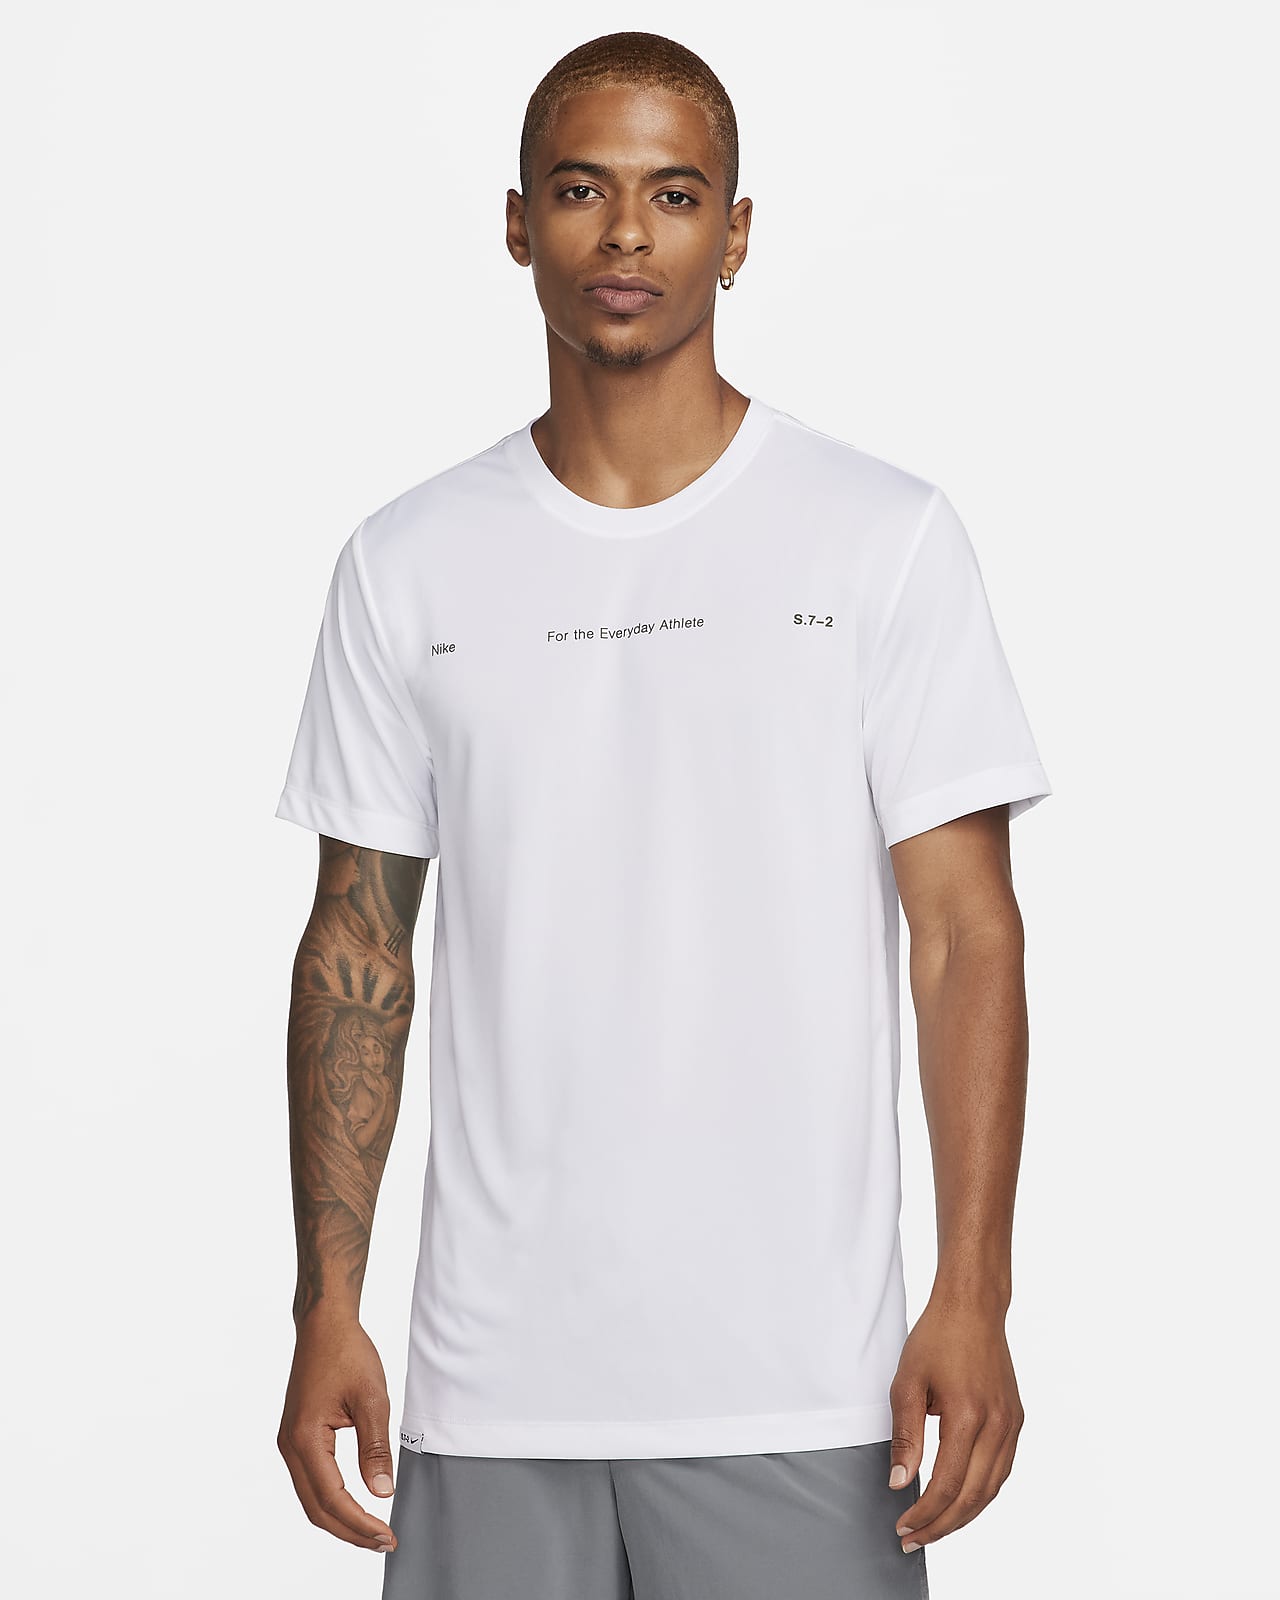 Nike Dri-FIT Camiseta deportiva - Hombre